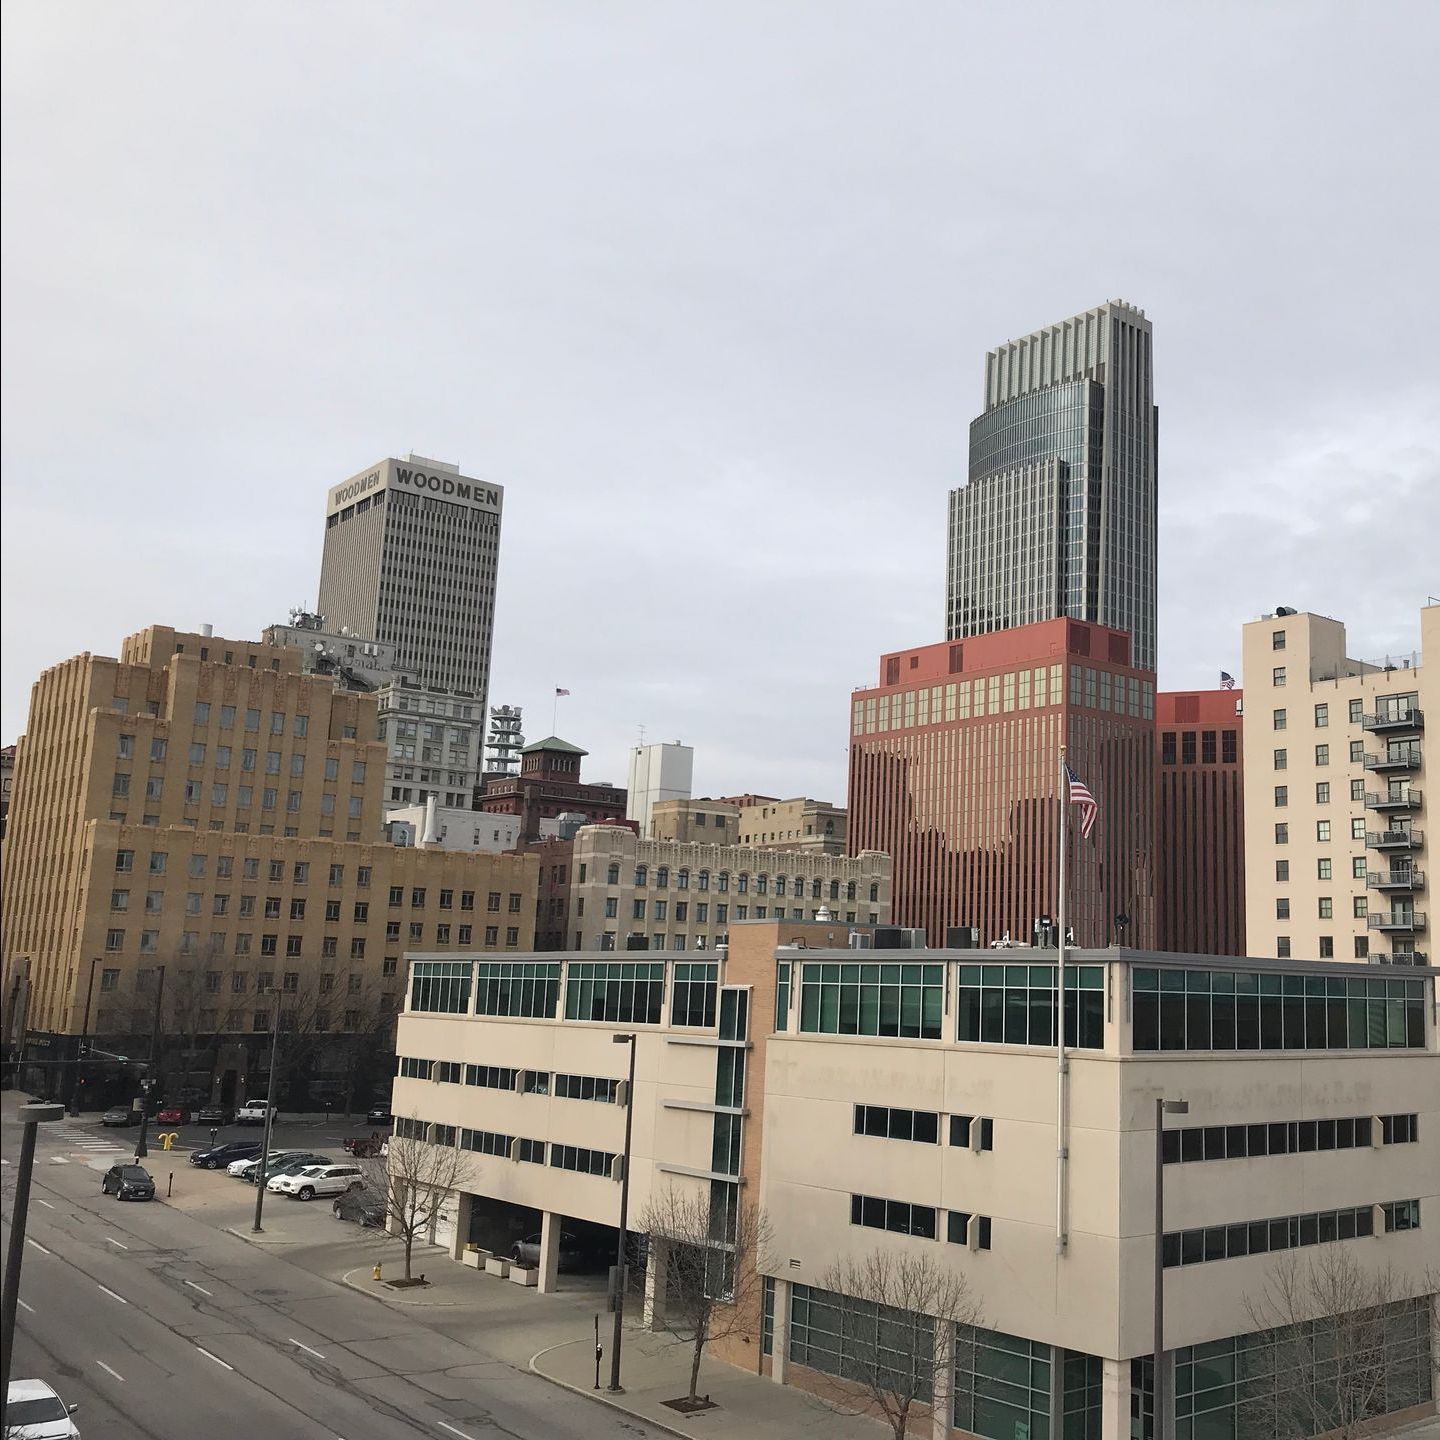 Downtown Omaha, Nebraska